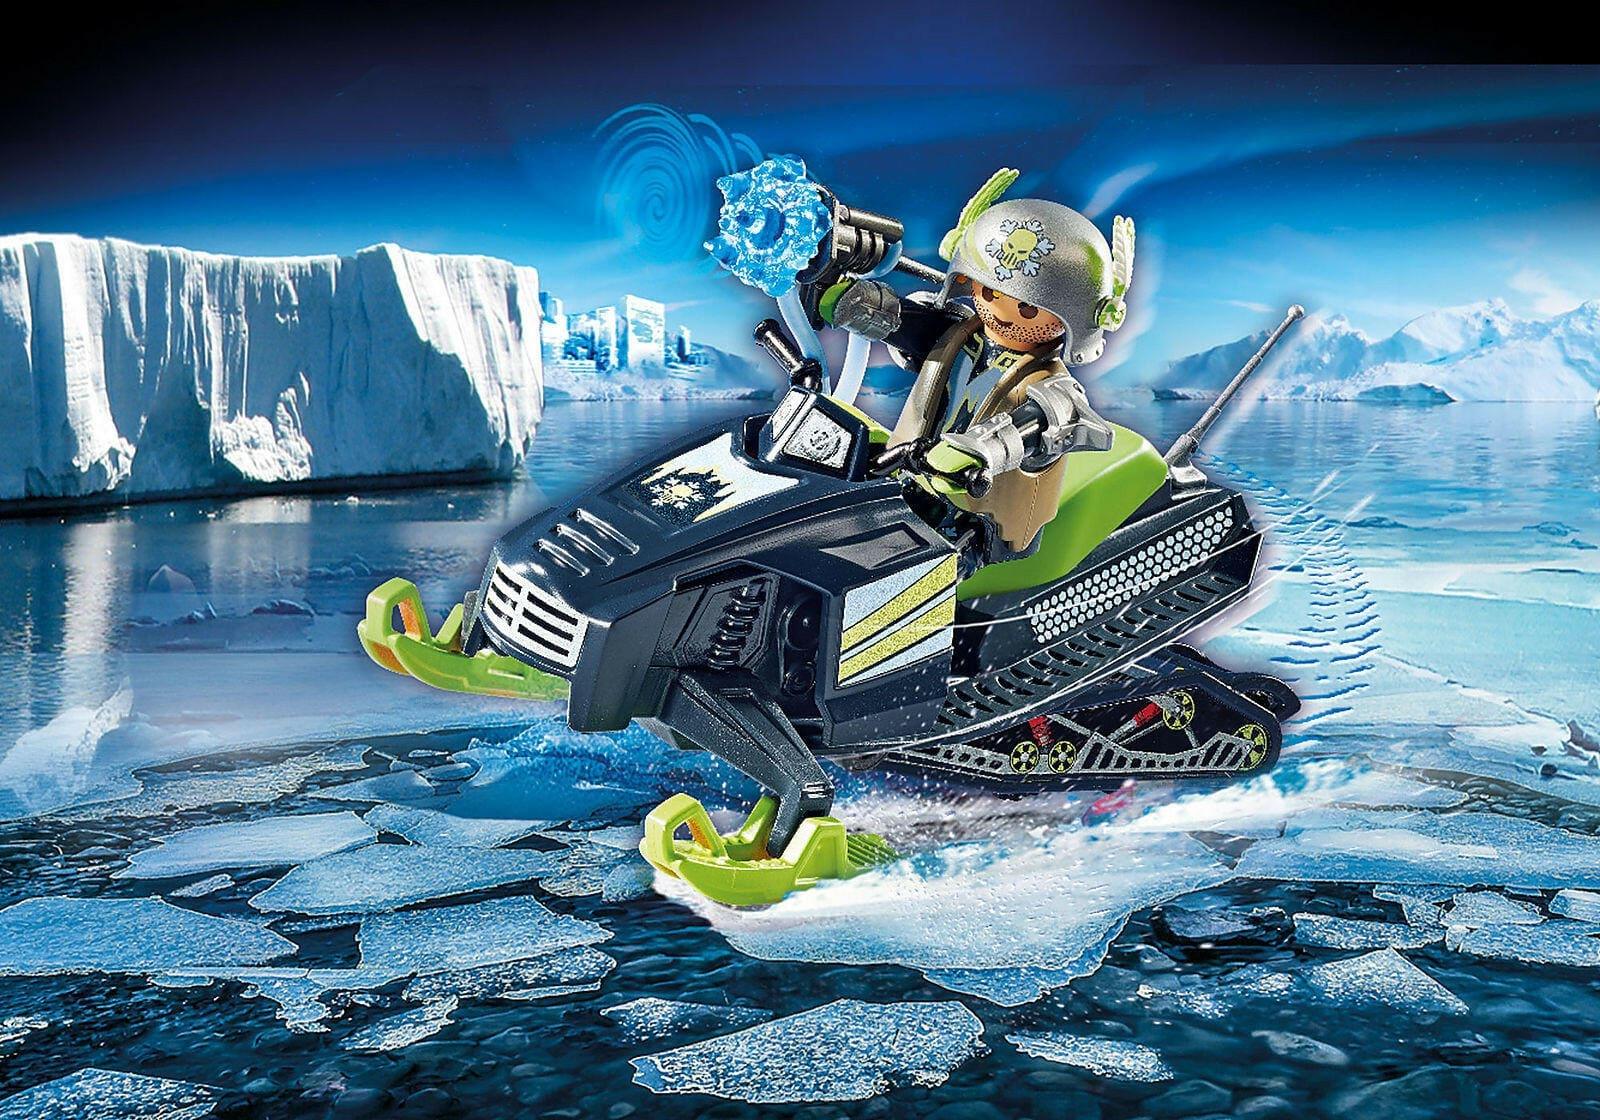 Playmobil Arctic Rebels Moto de Gelo - Brincatoys